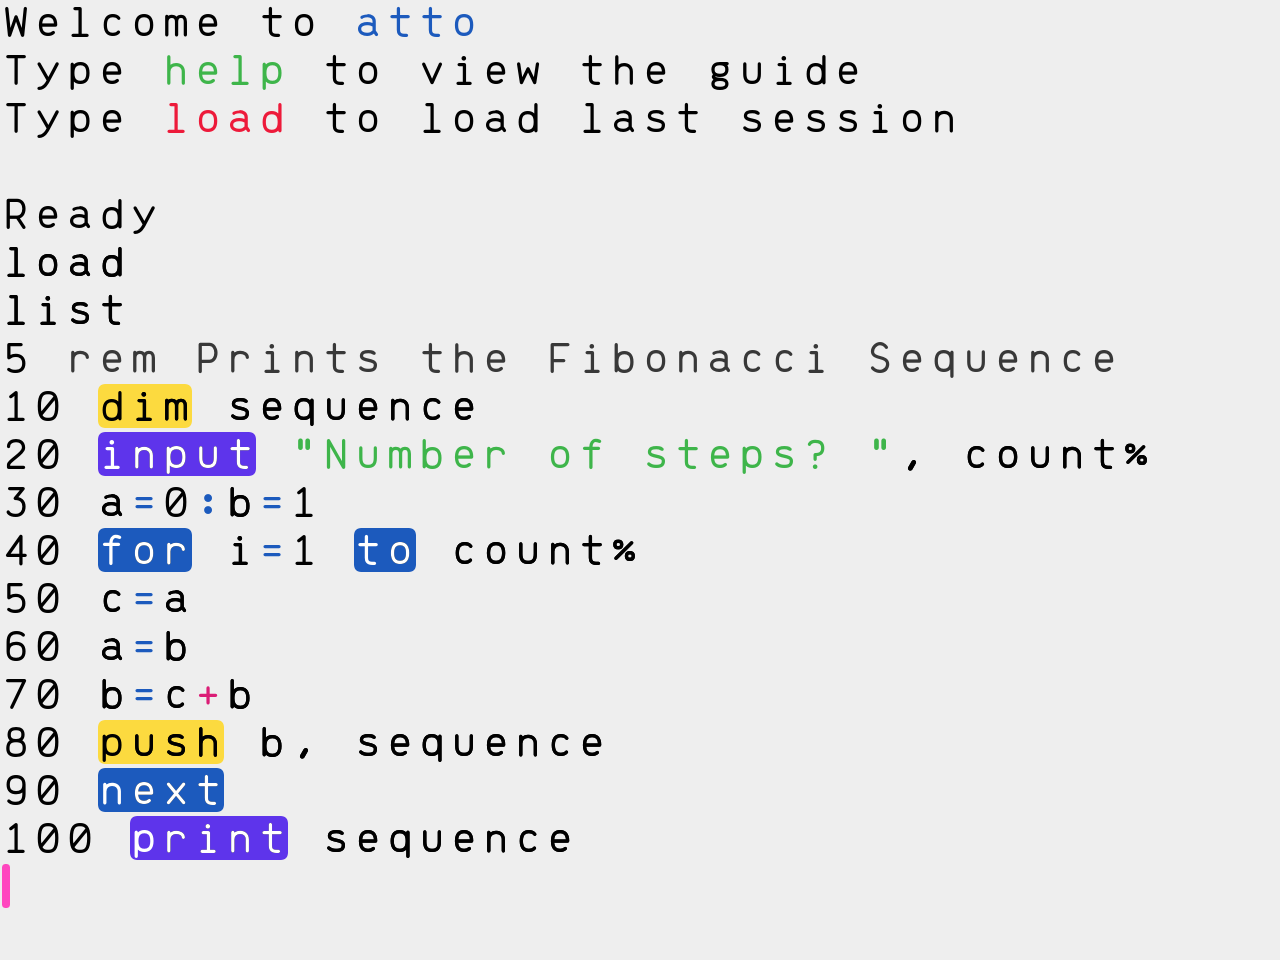 Screenshot of atto showing code to print the Fibonacci Sequence